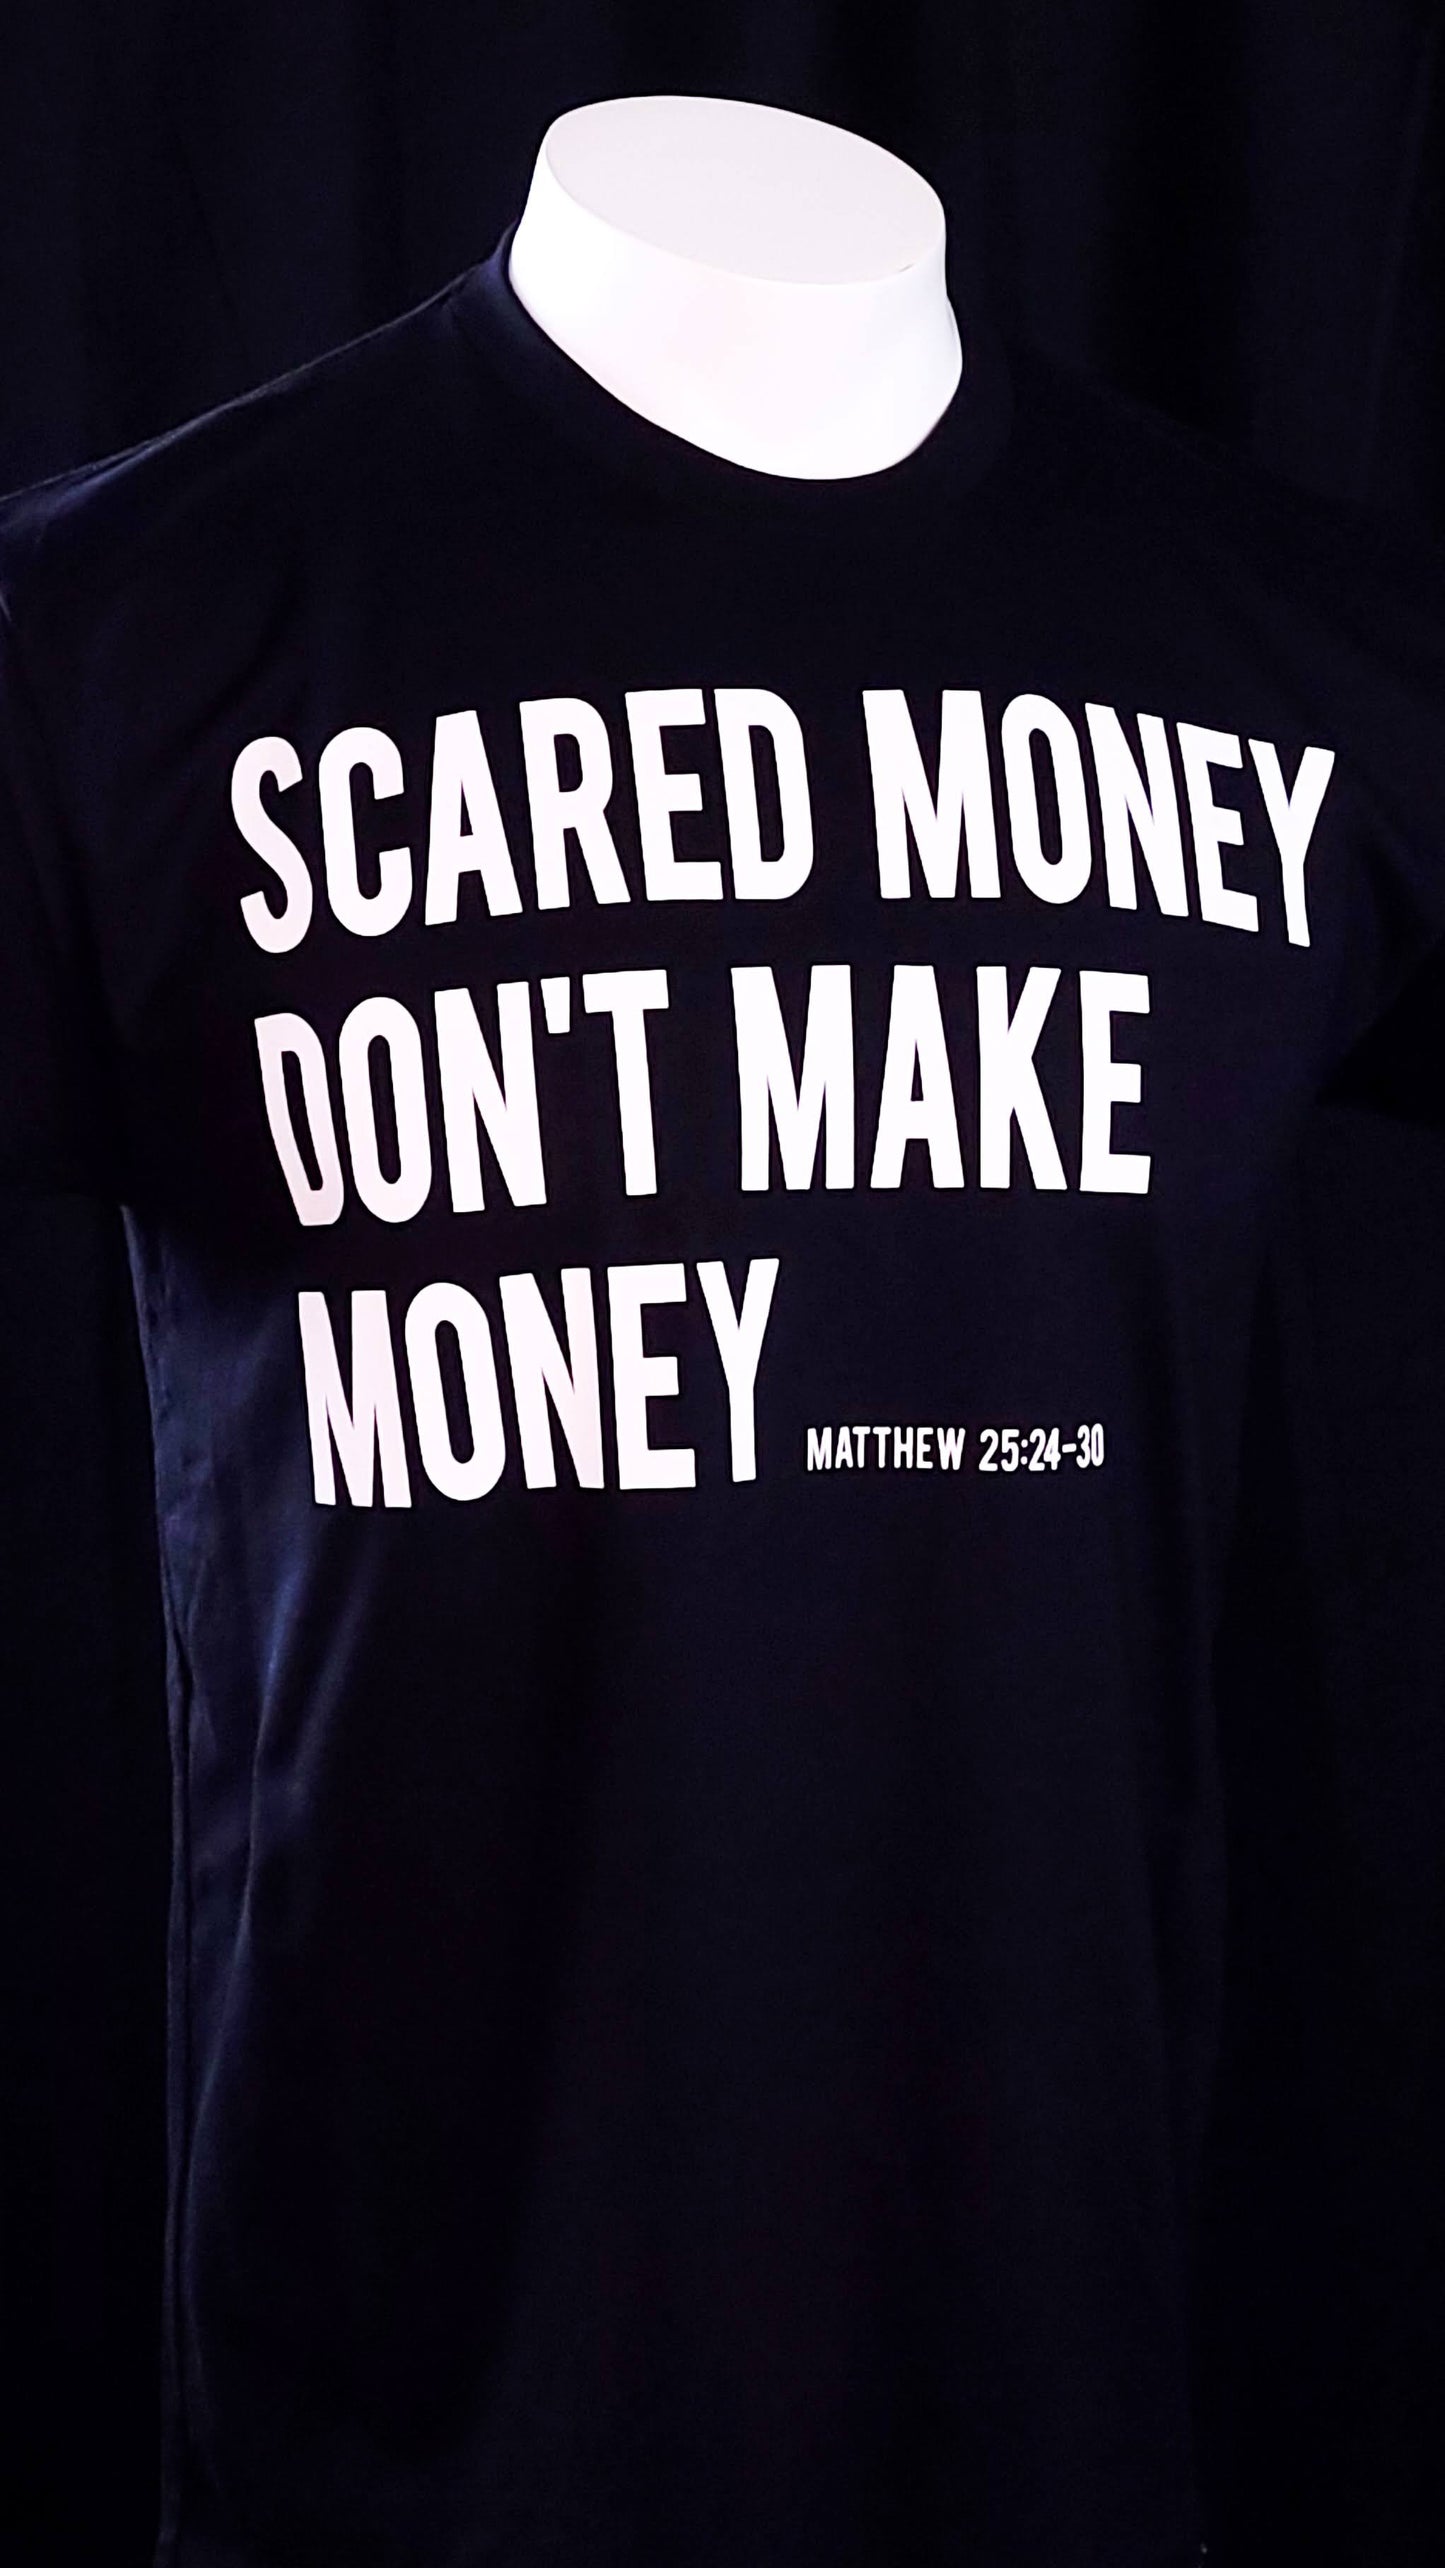 SCARED MONEY DON'T MAKE MONEY